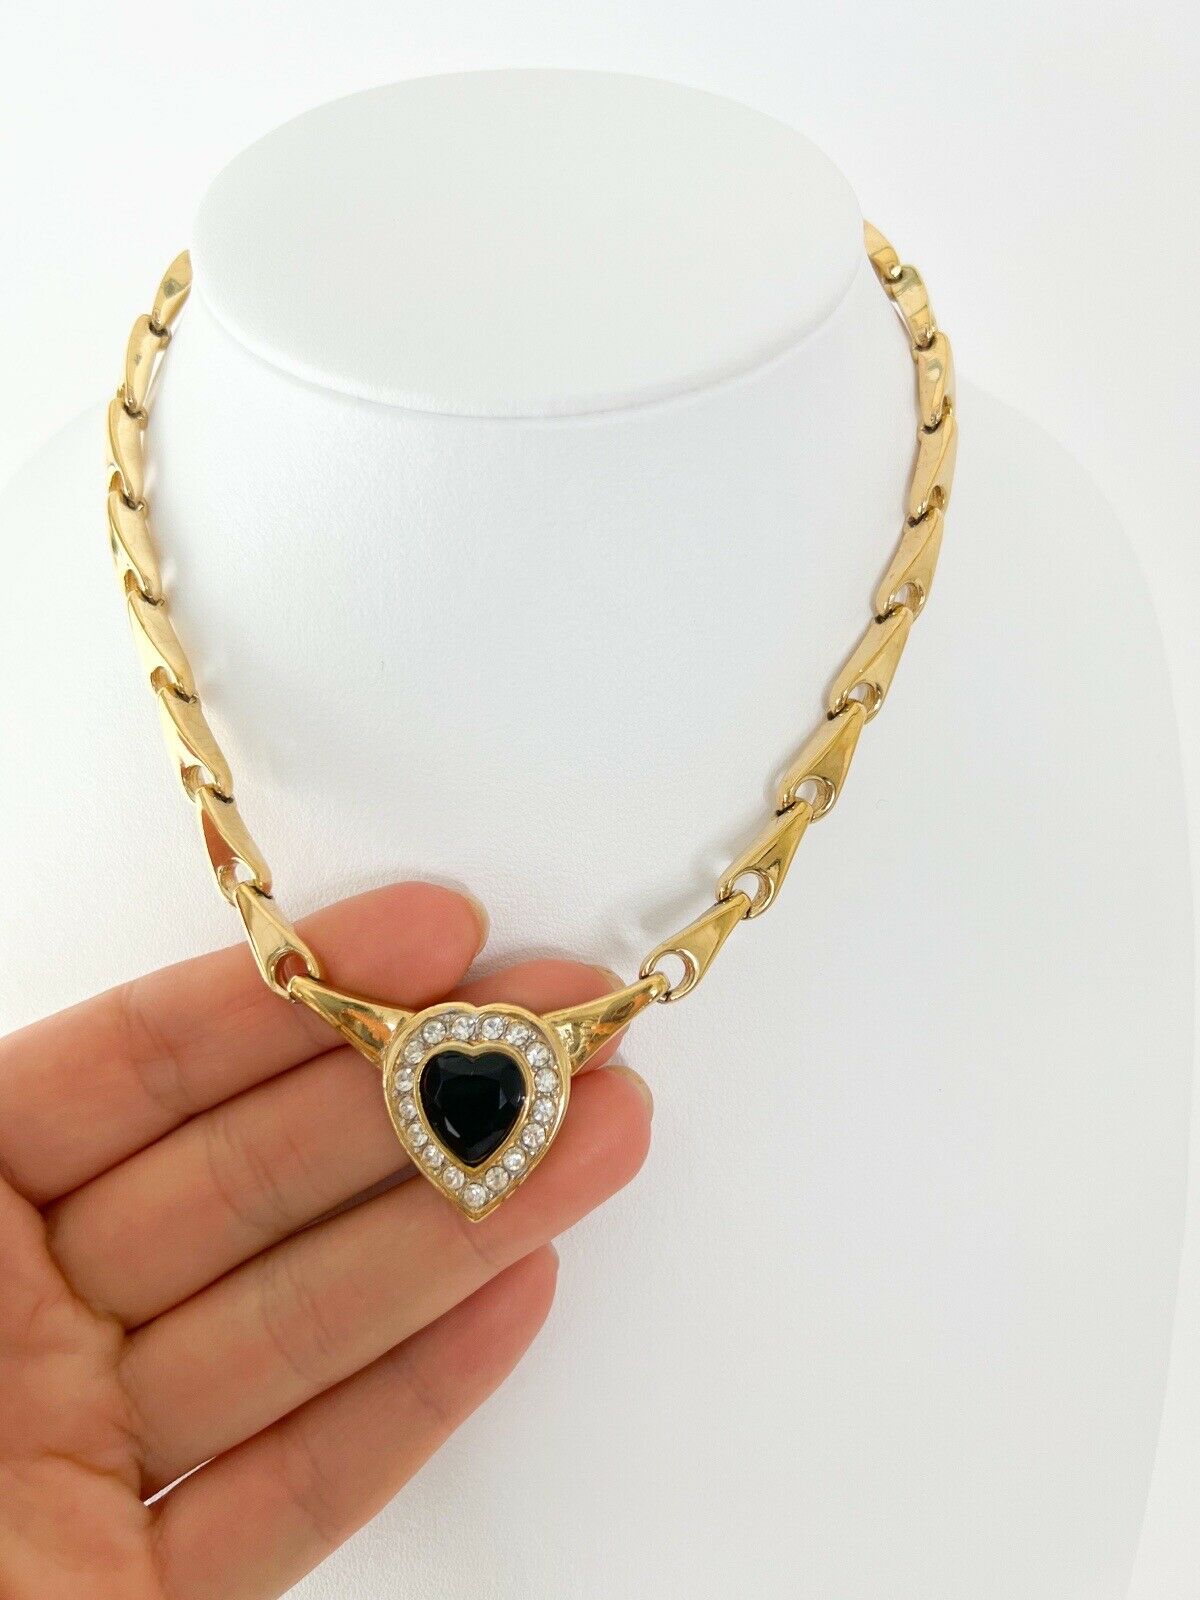 Nina Ricci Vintage Charm Necklace Choker Gold